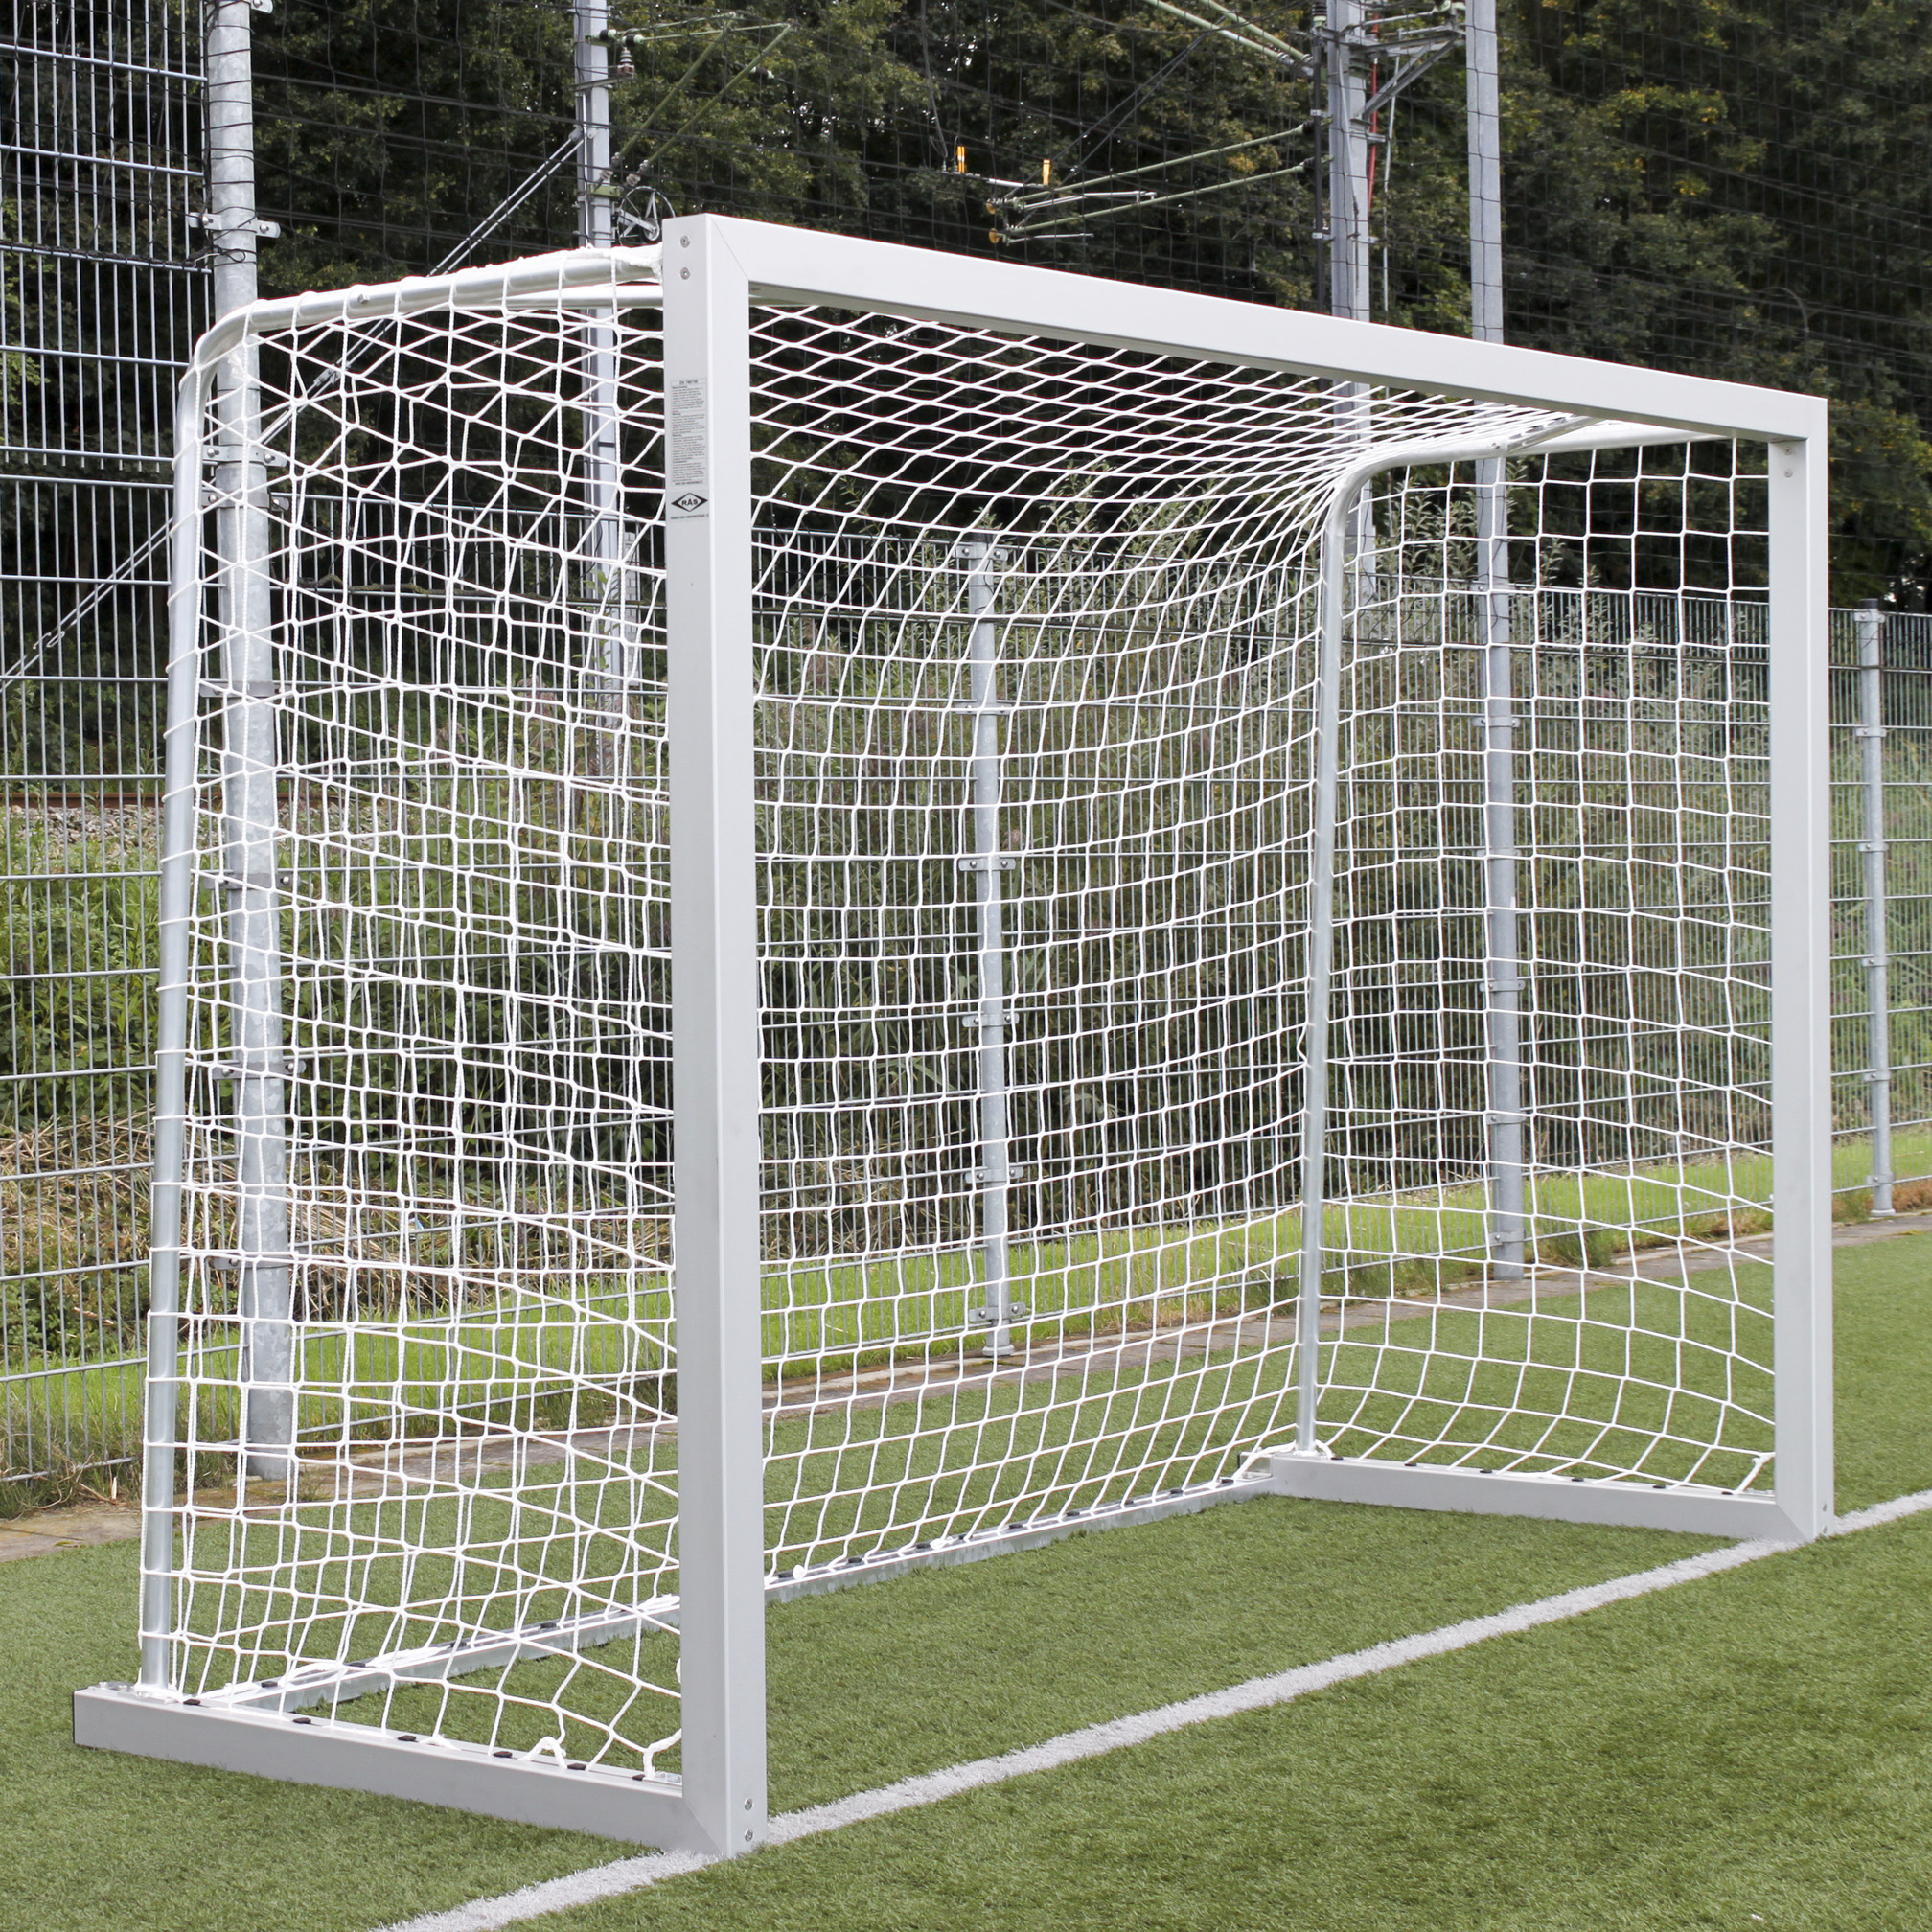 Goal 300x200 cm, movable